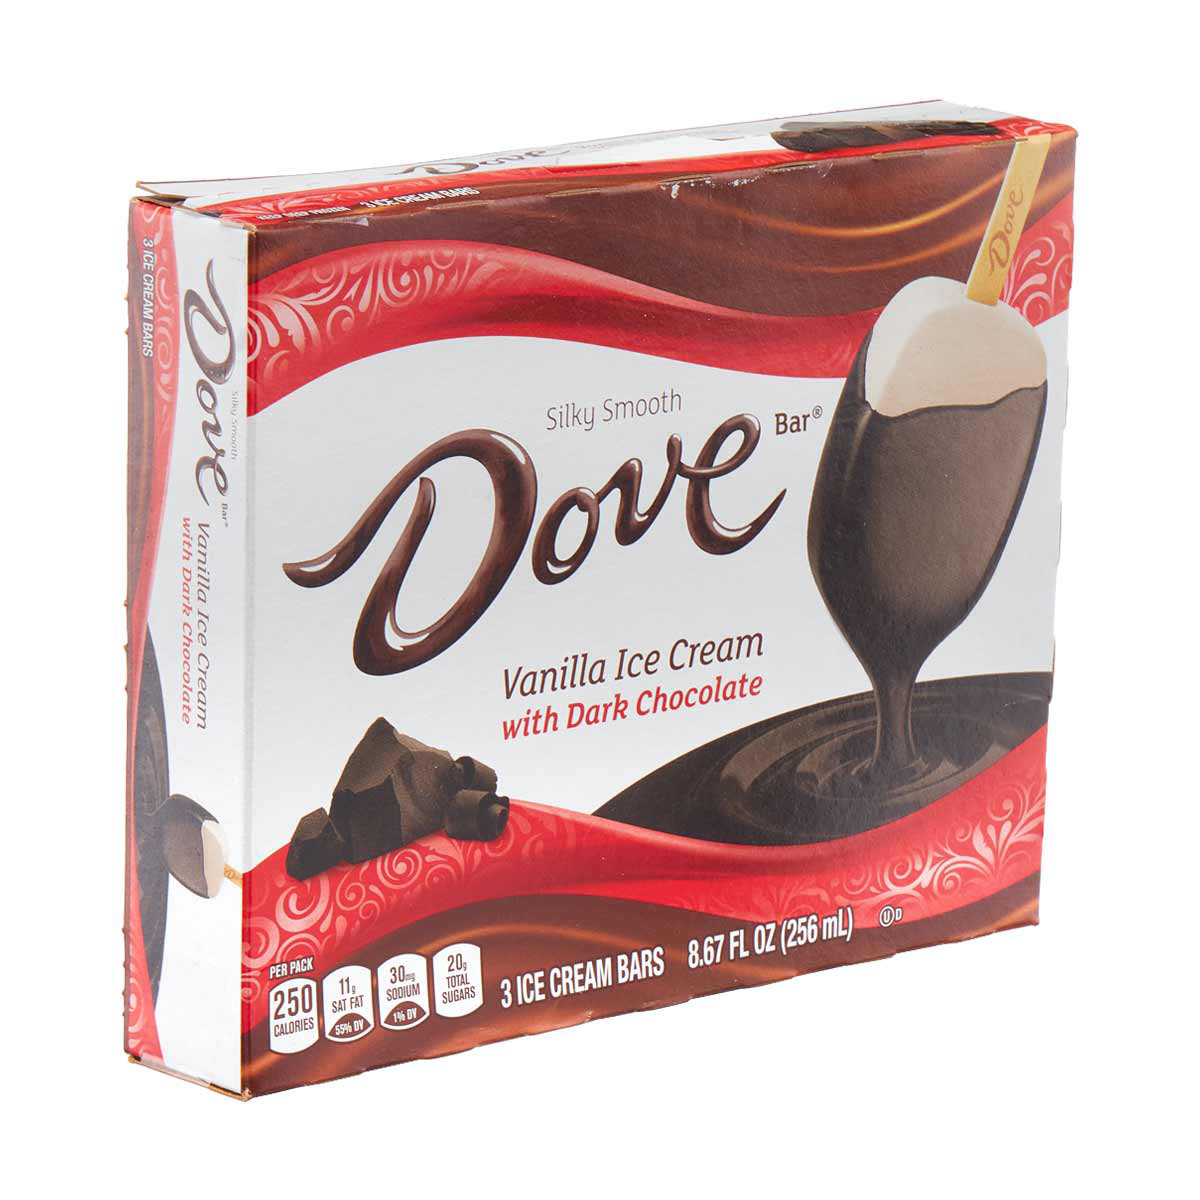 Dove Vanilla & Dark Chocolate Ice Cream Bar, 8.67 fl. oz.